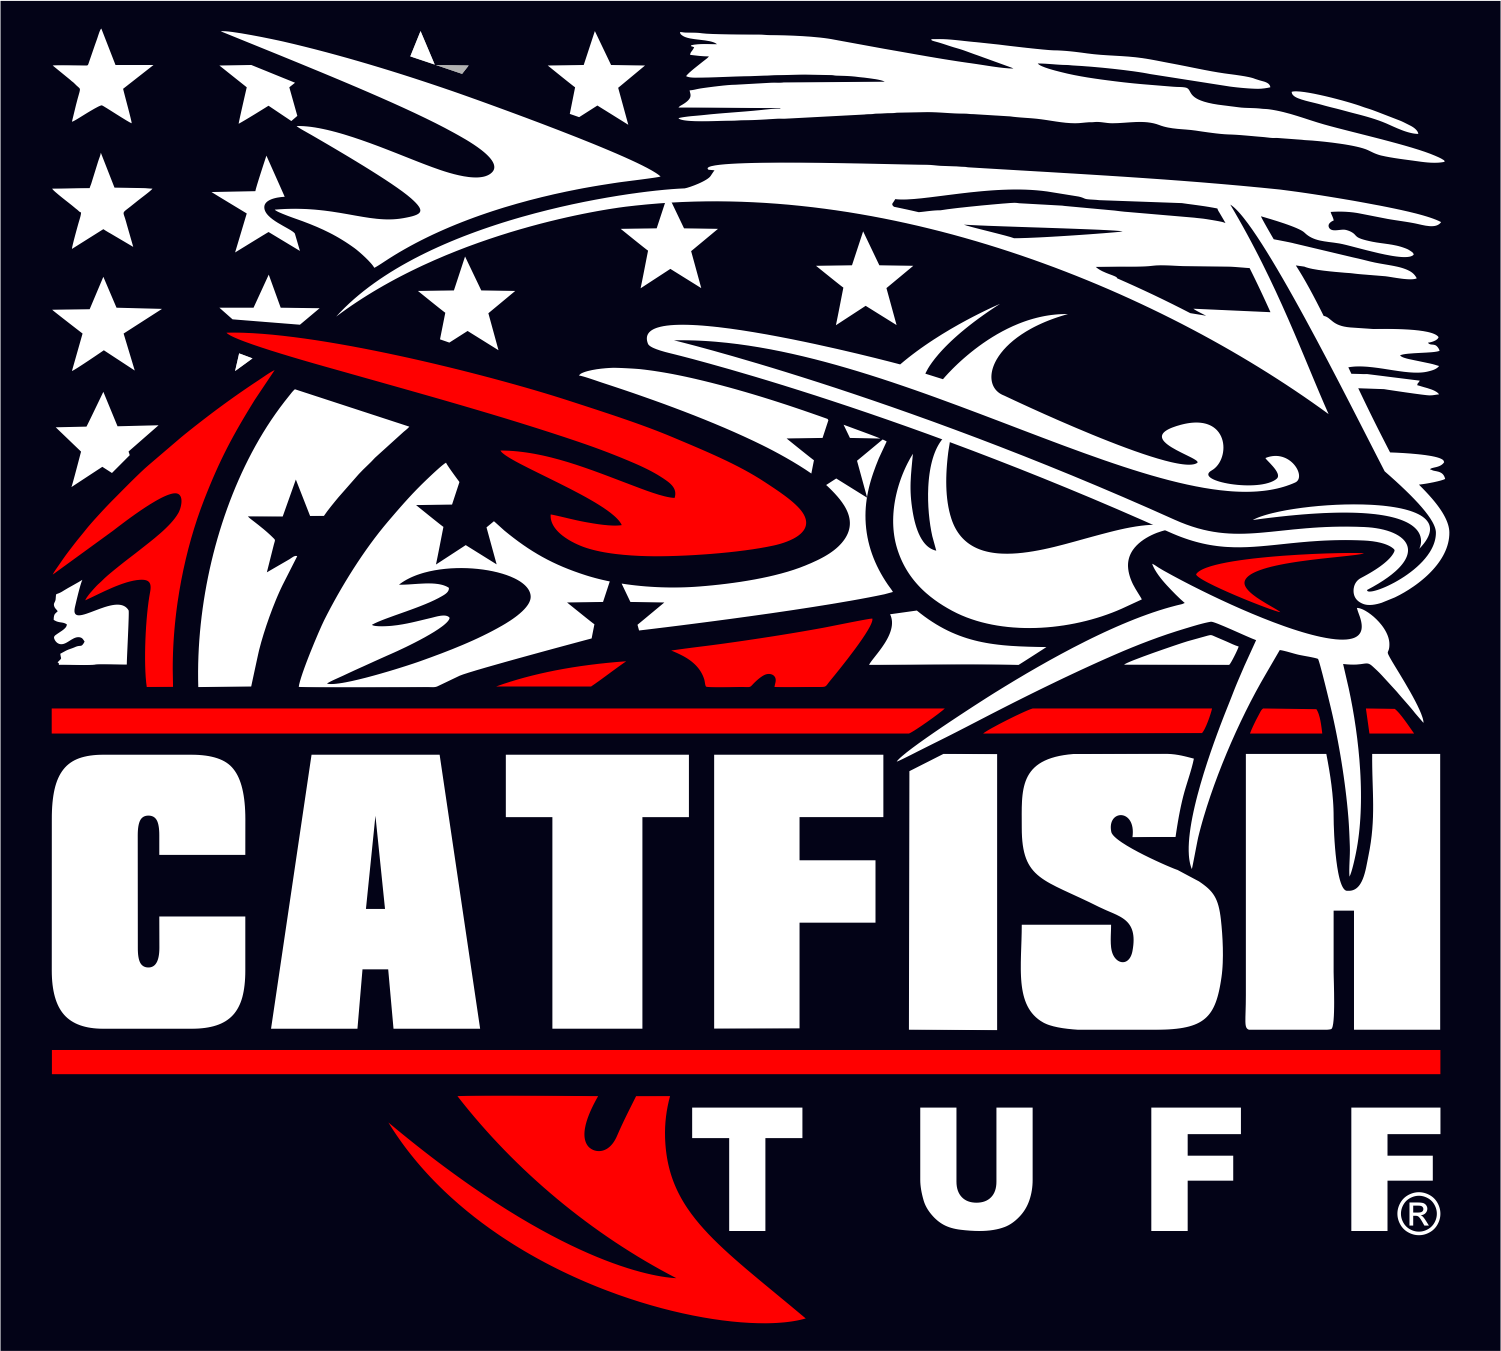 Catfish Tuff - Patriot 5 x 4.5 Decal - catfish sticker - Hook & Drag